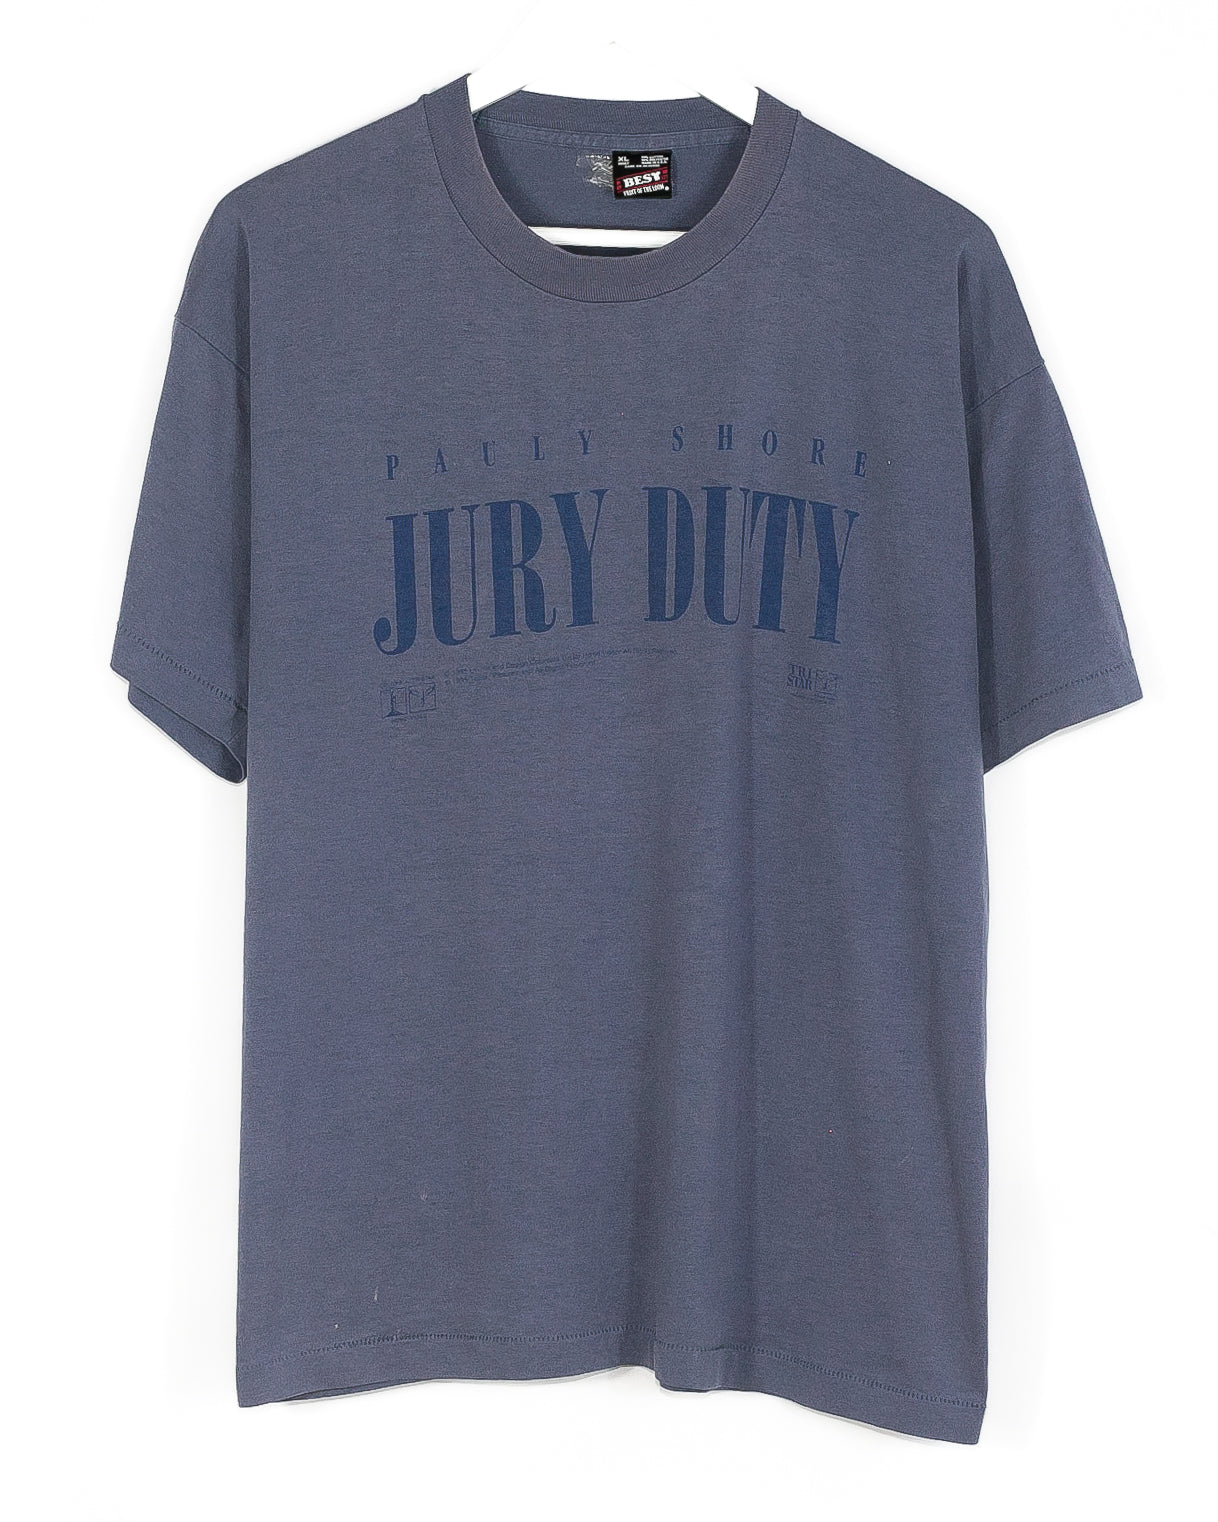 Vintage Jury Duty 95 T-shirt  (L/XL)